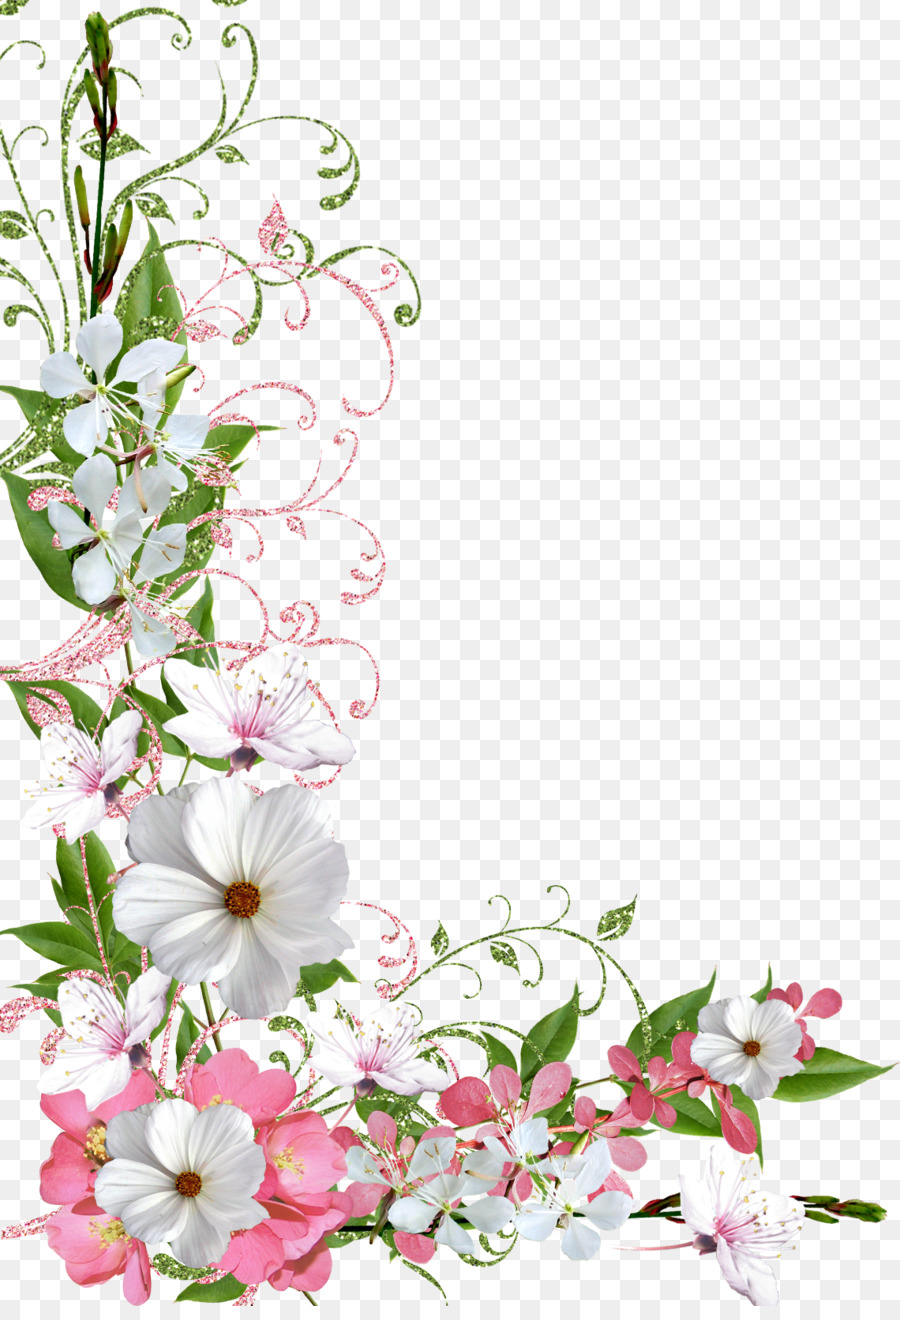 Border Flowers Clip art - spring png download - 1140*1654 - Free Transparent Border Flowers png Download.